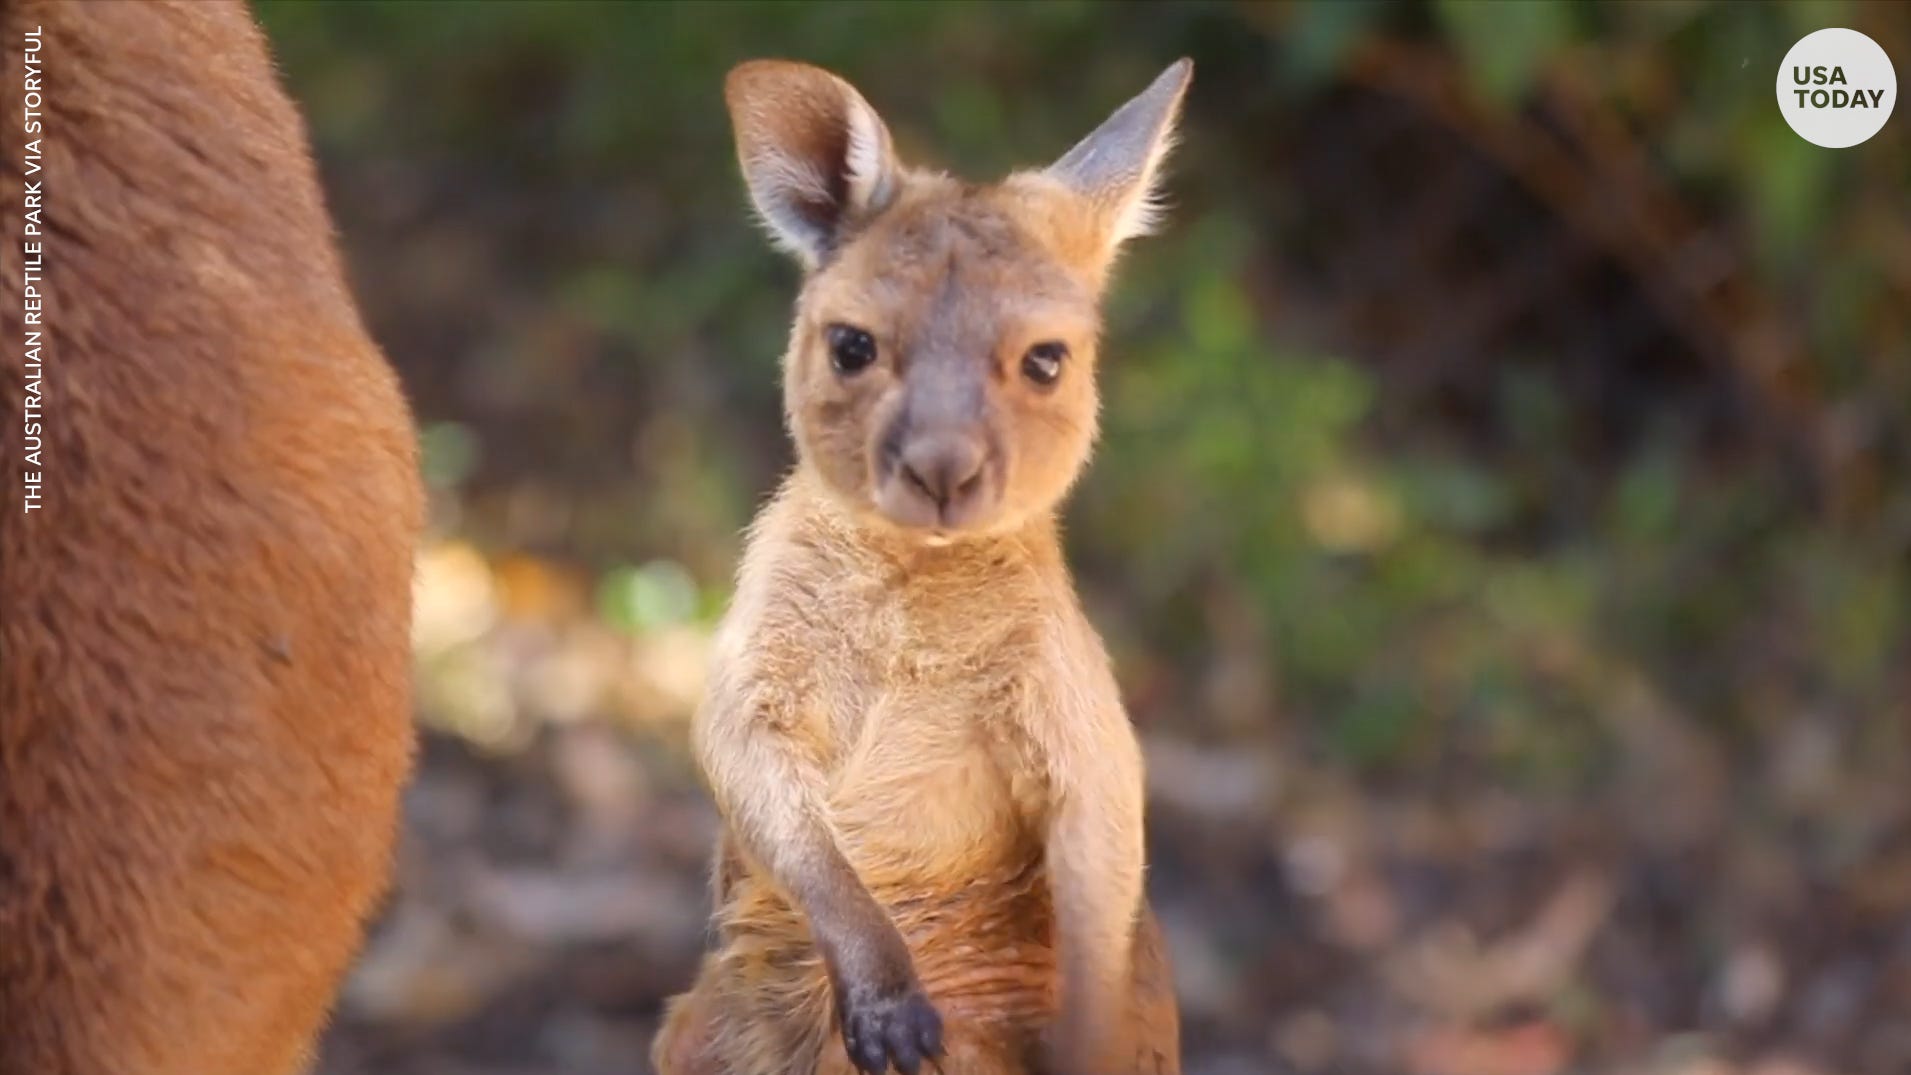 kangaroo-joey-takes-its-first-hops-at-australia-zoo